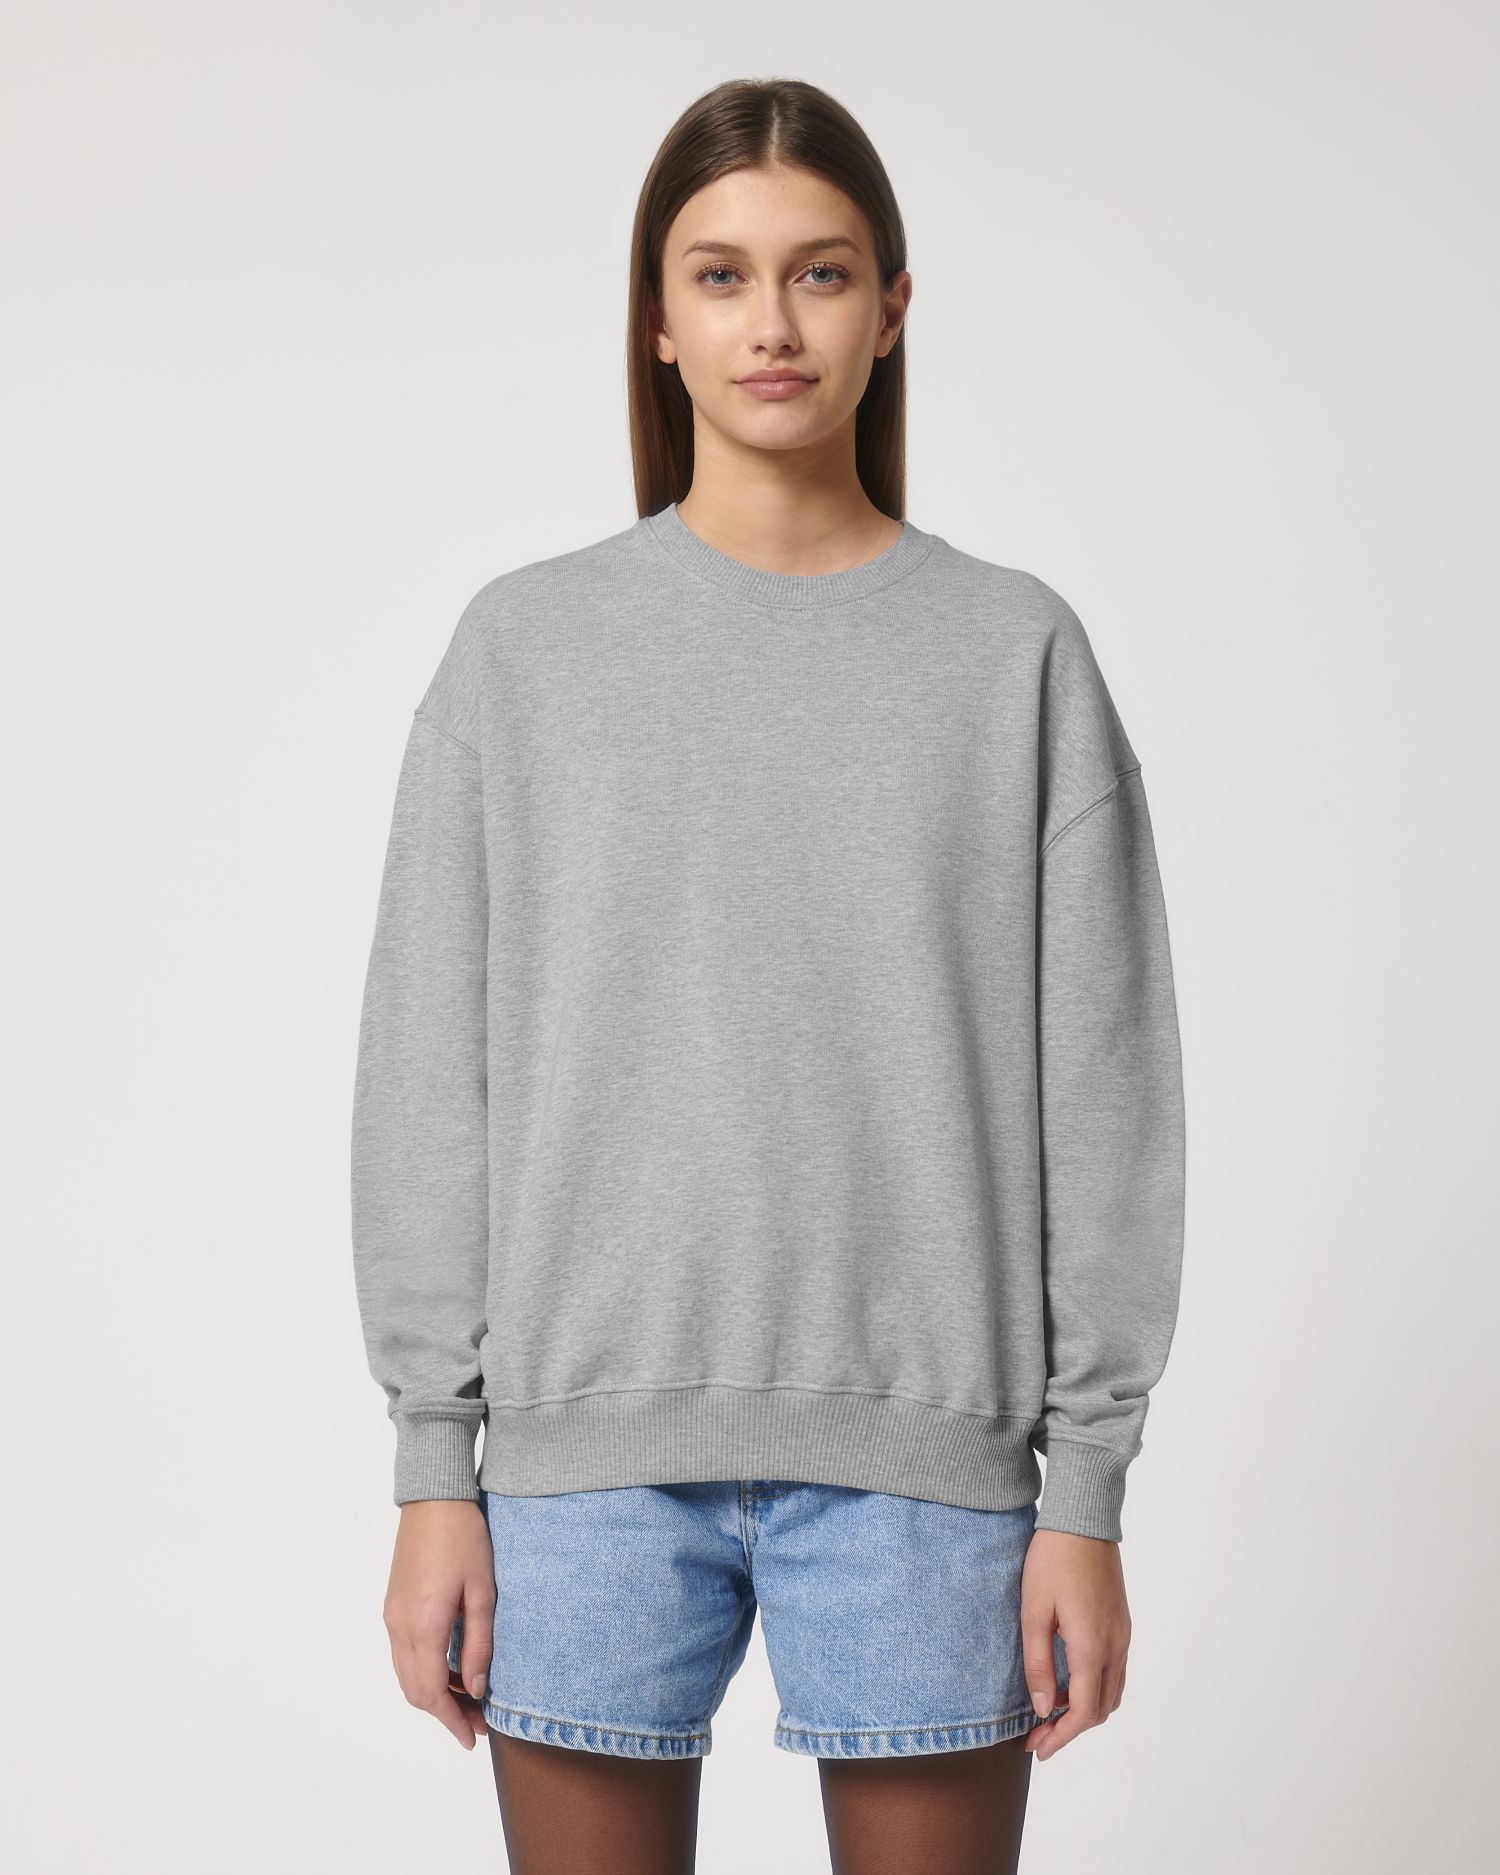 Crew neck sweatshirts Ledger Dry in Farbe Heather Grey